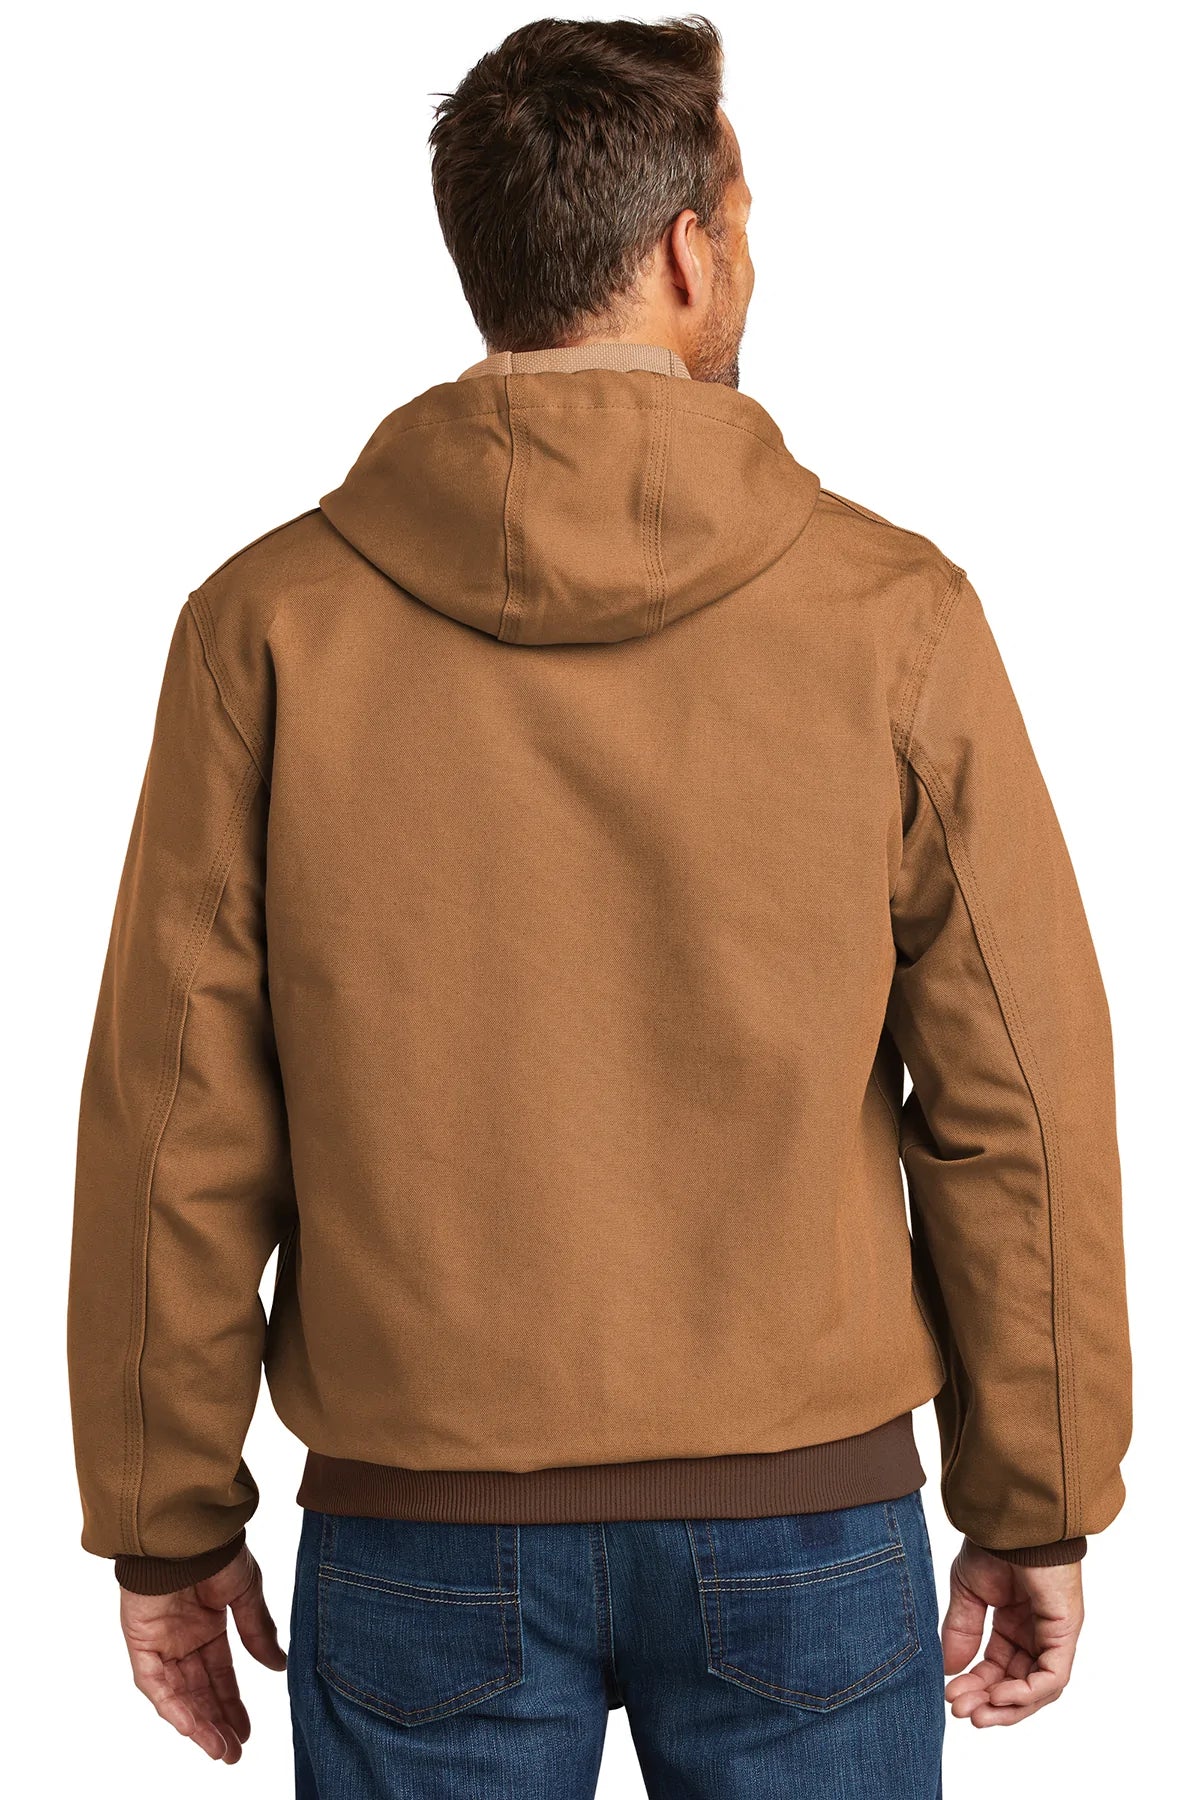 carhartt_ctj131 _carhartt brown_company_logo_jackets